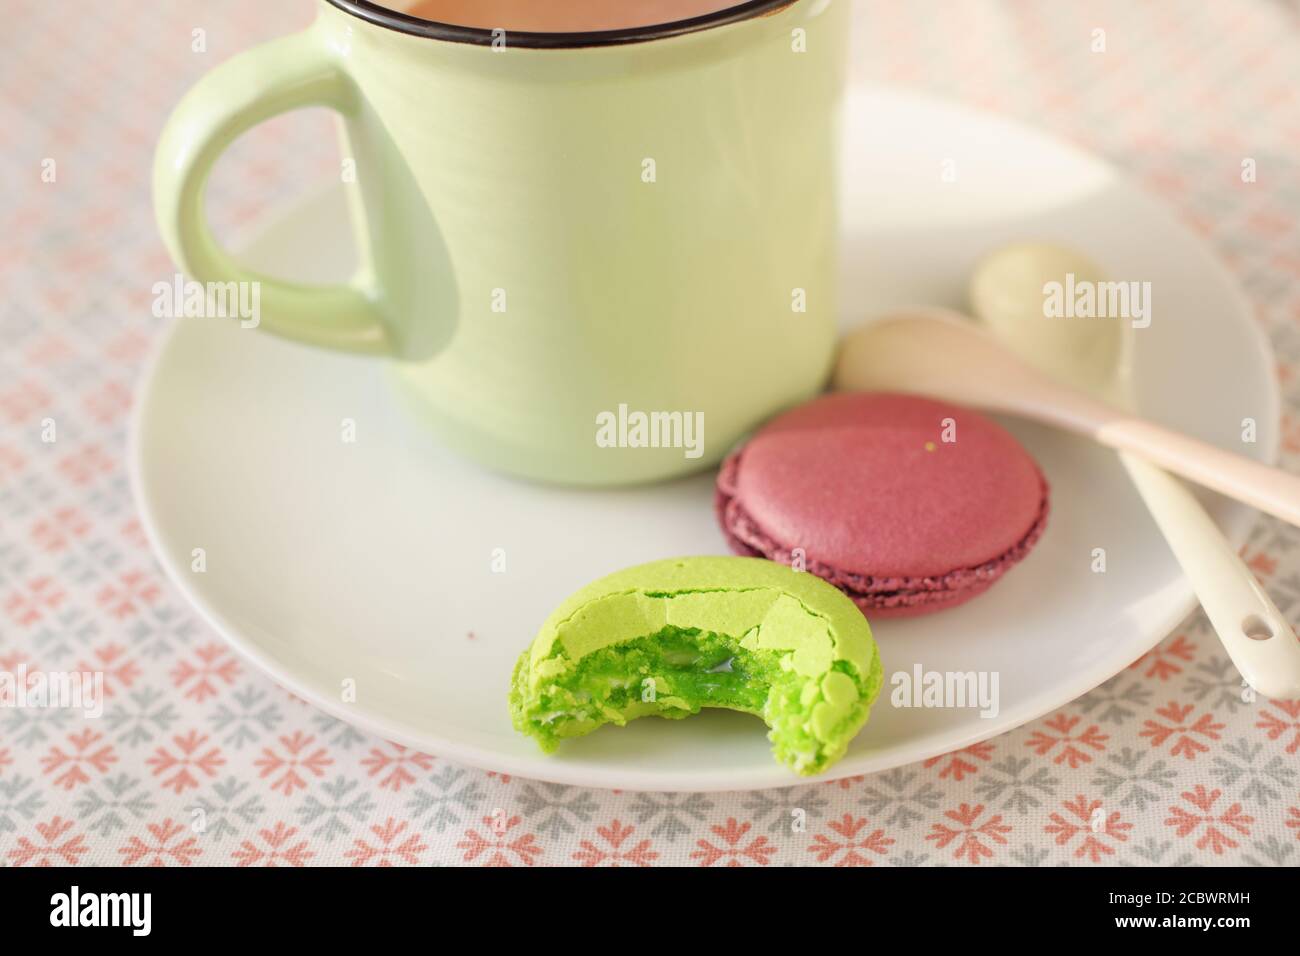 Enamel mug with hot chocolate and macarons Stock Photo